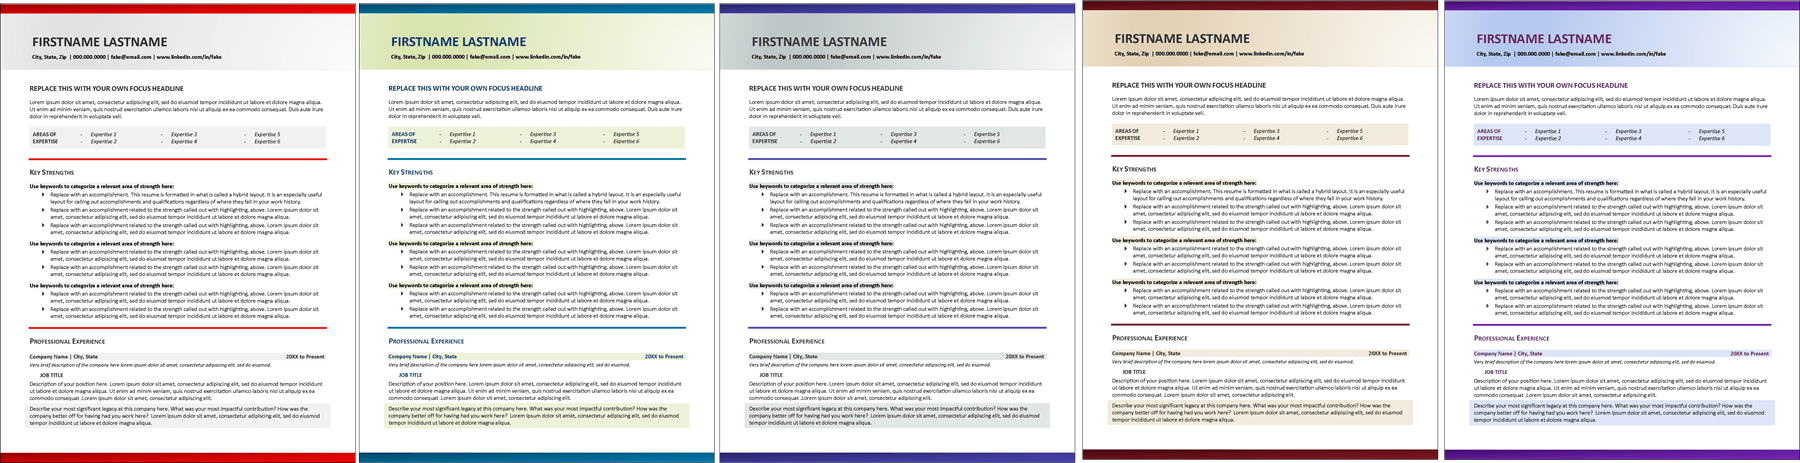 Hybrid Resume Layout Colors